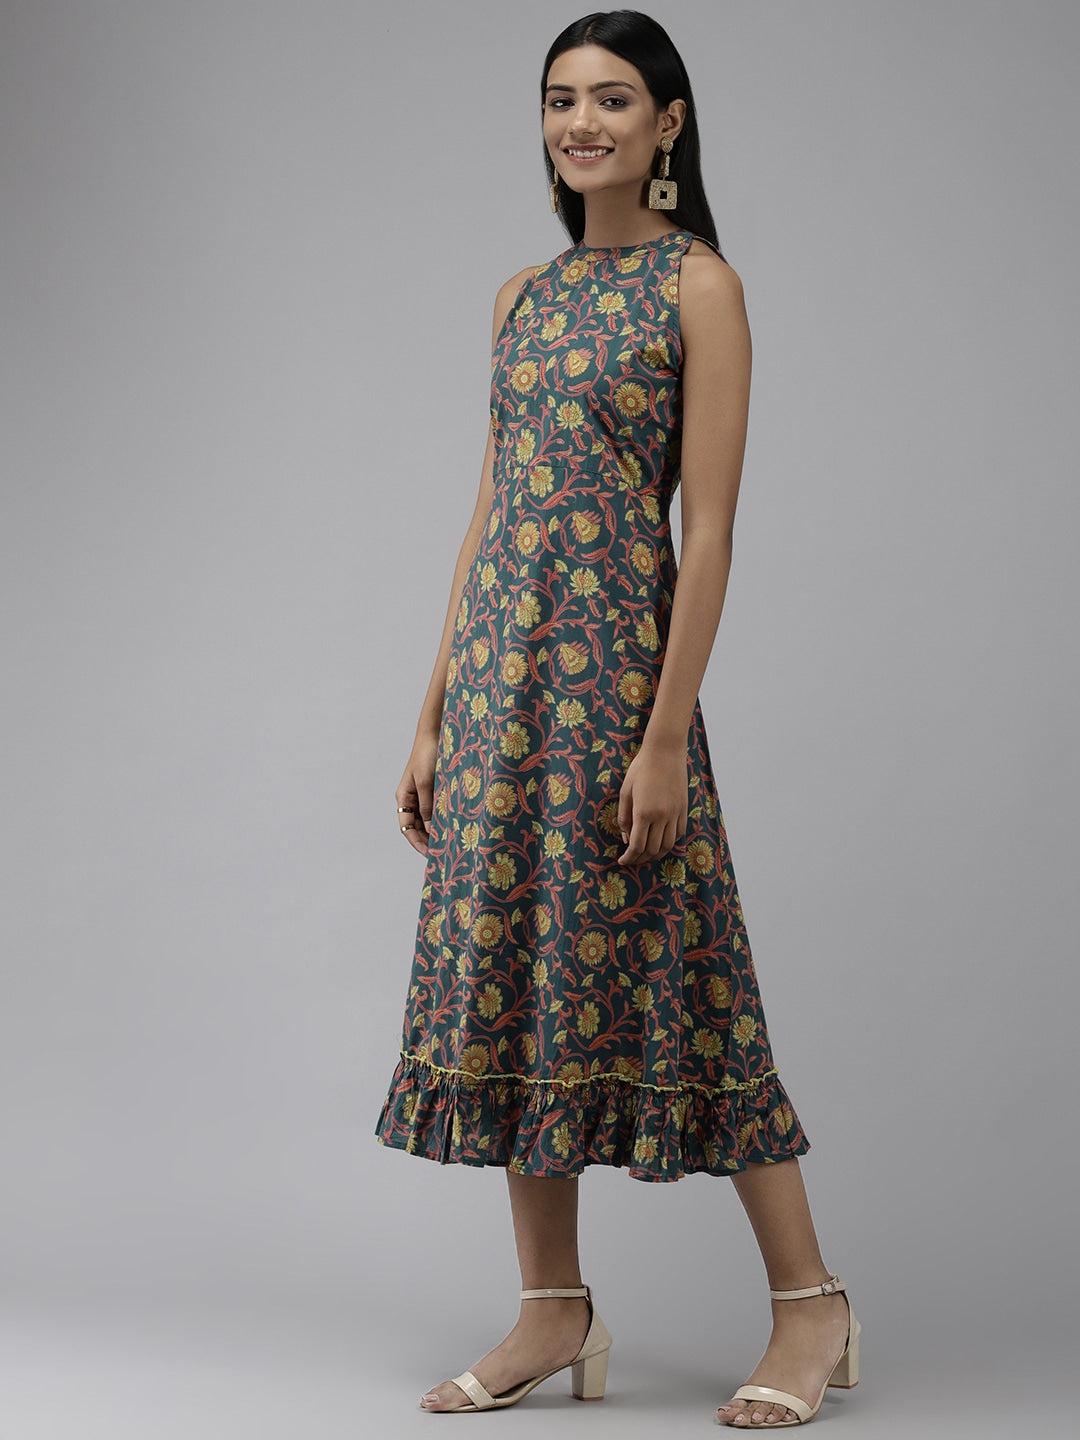 teal-floral-dress-10104019BL, Women Clothing, Cotton Dress